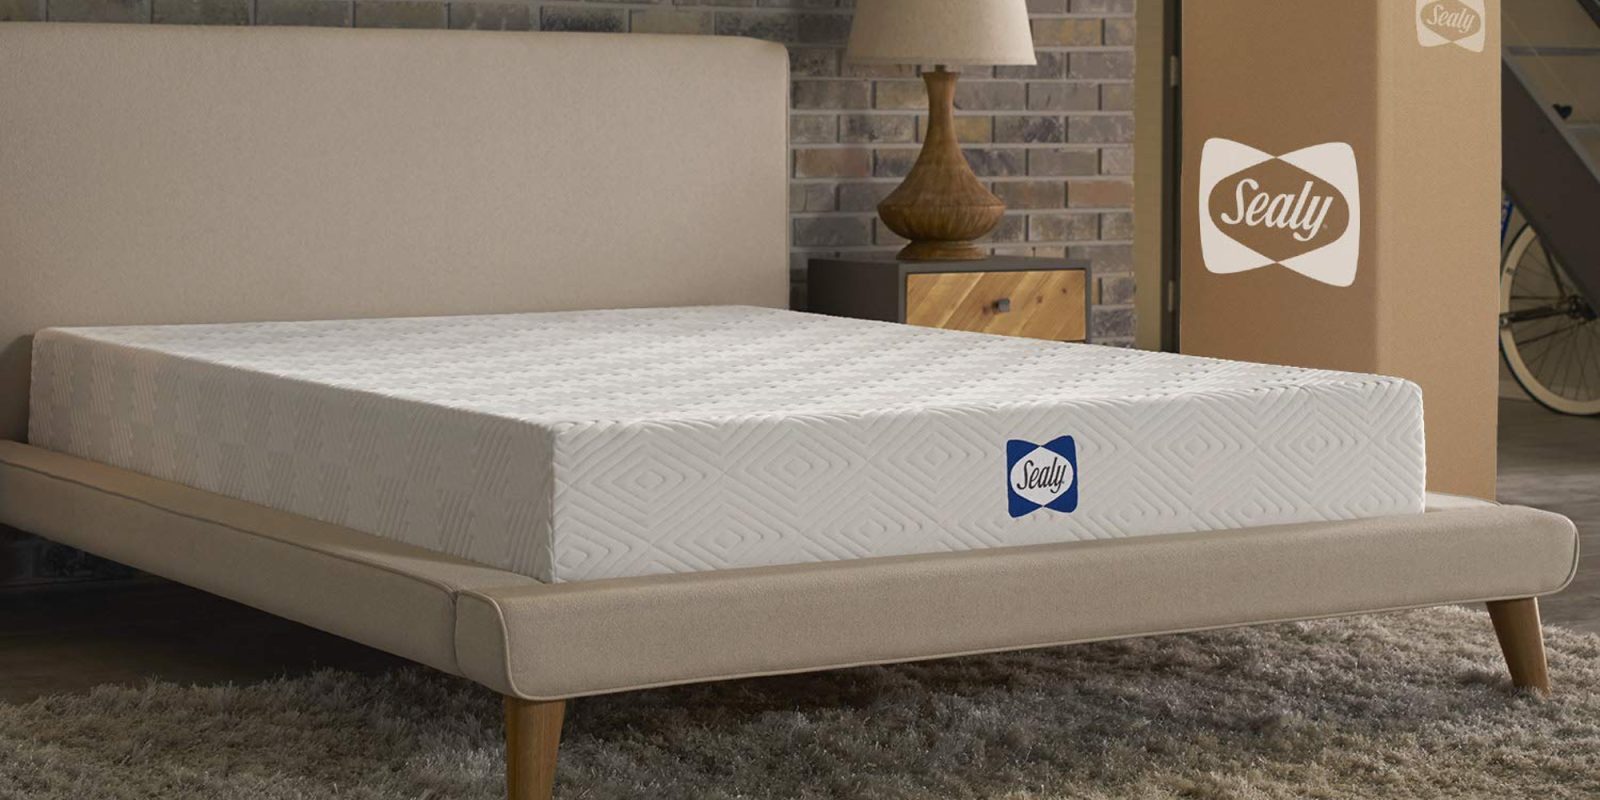 sealy 8 inch memory foam queen mattress